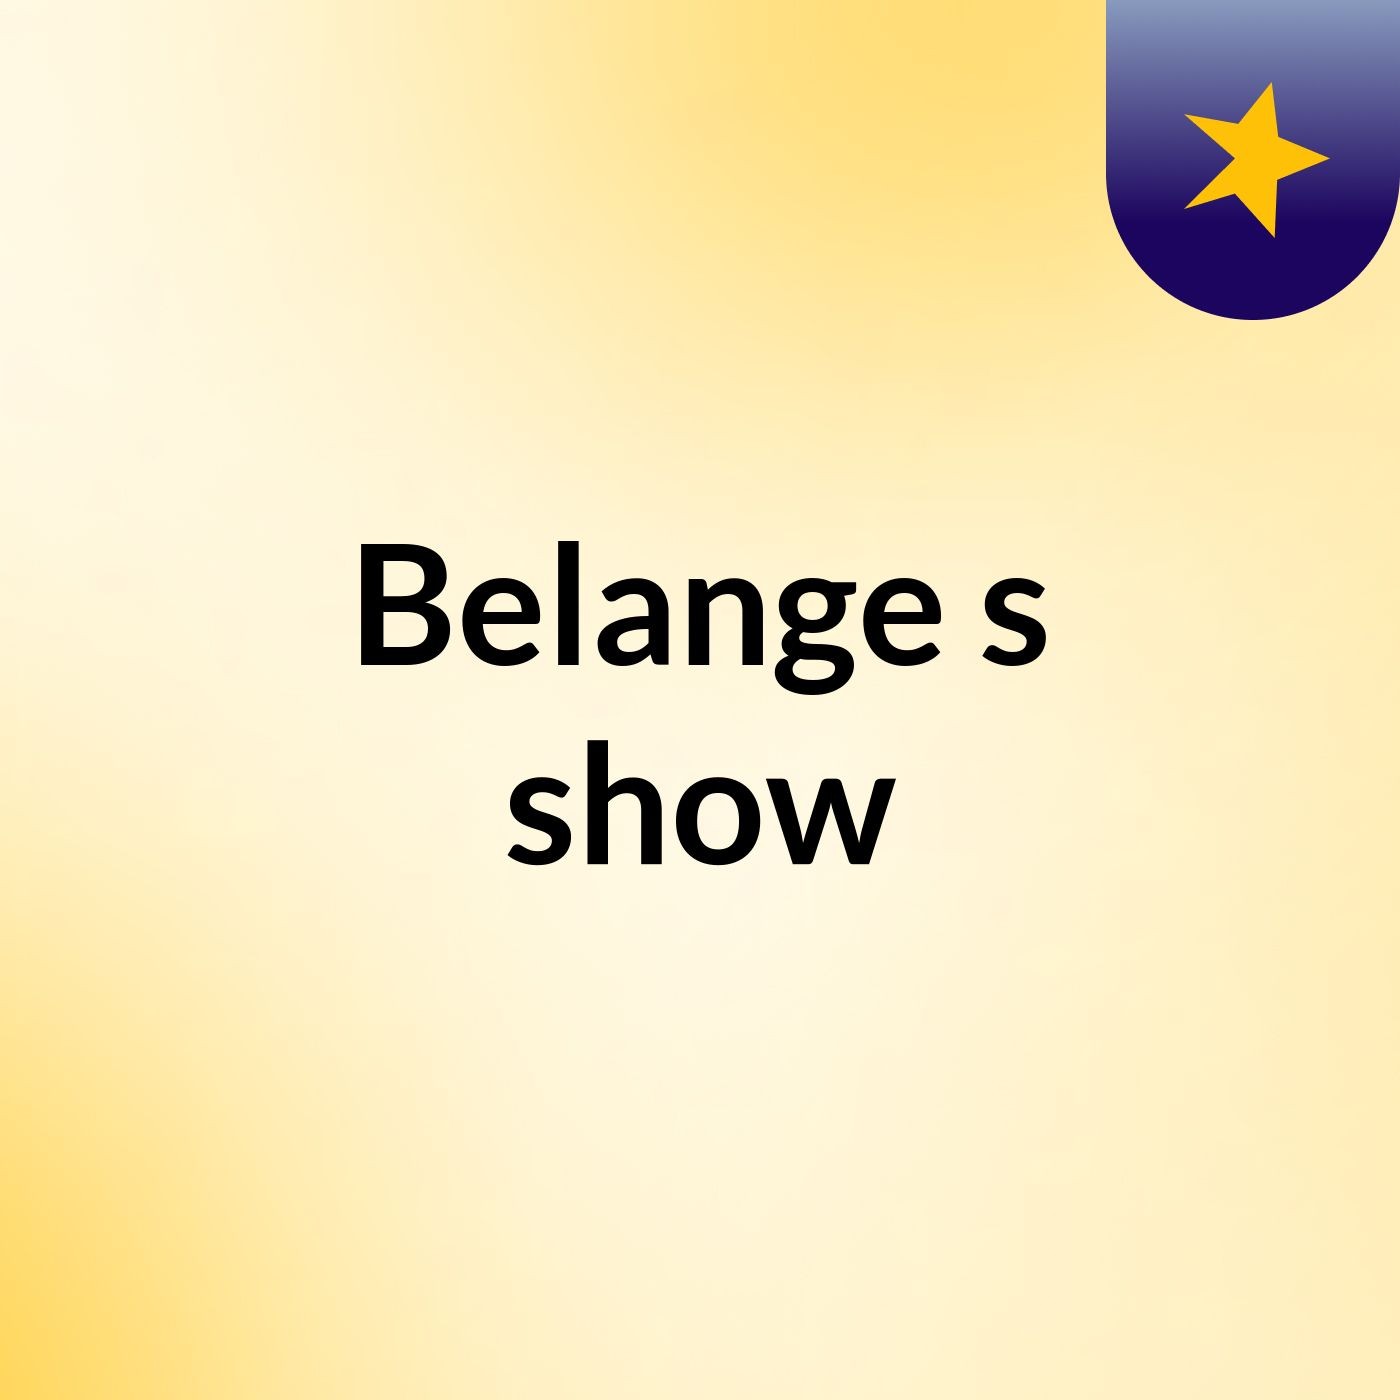 Belange's show